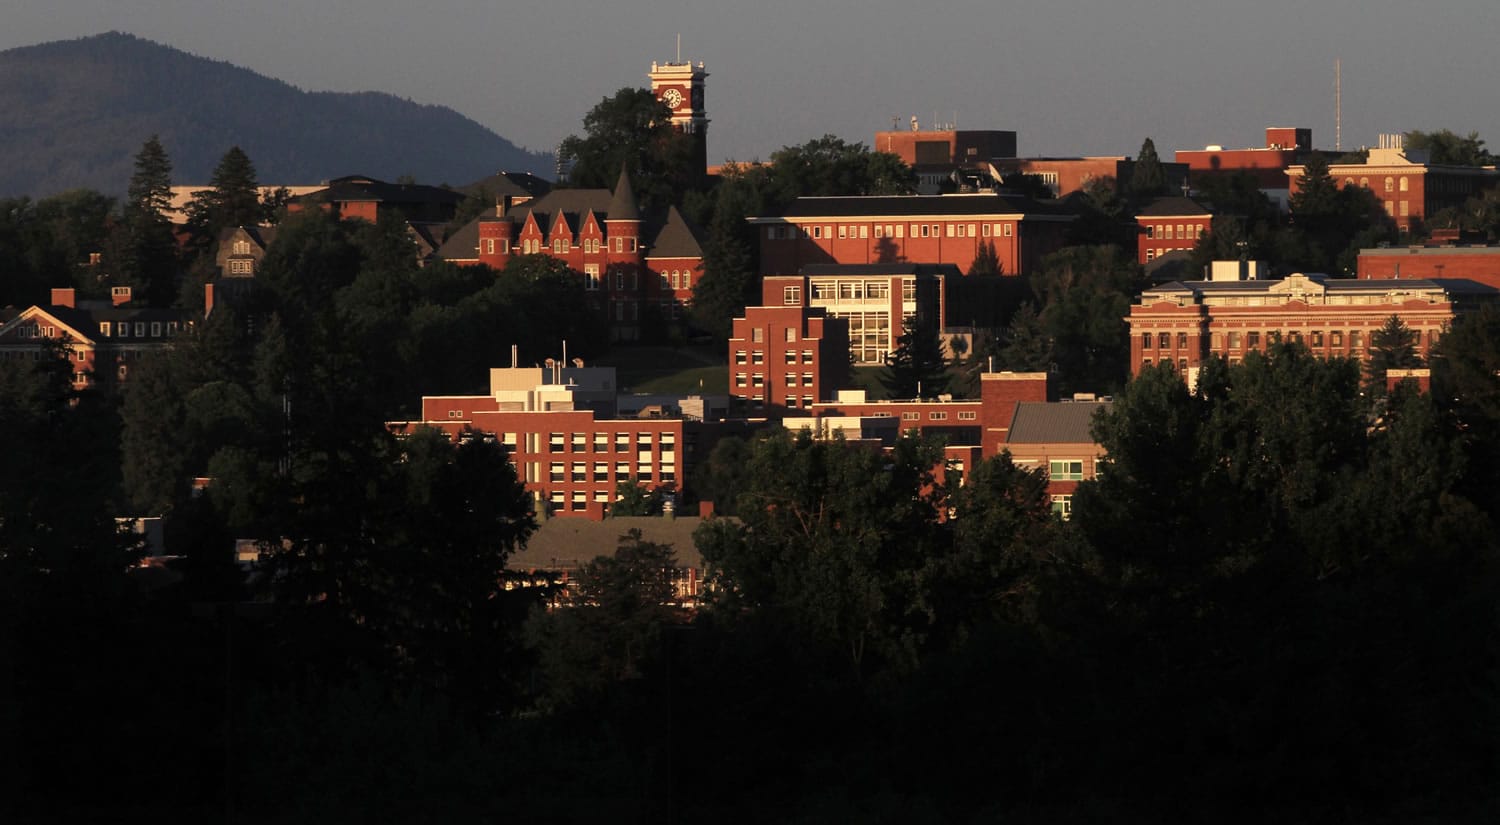 Washington State University's Pullman campus glows on its hill.